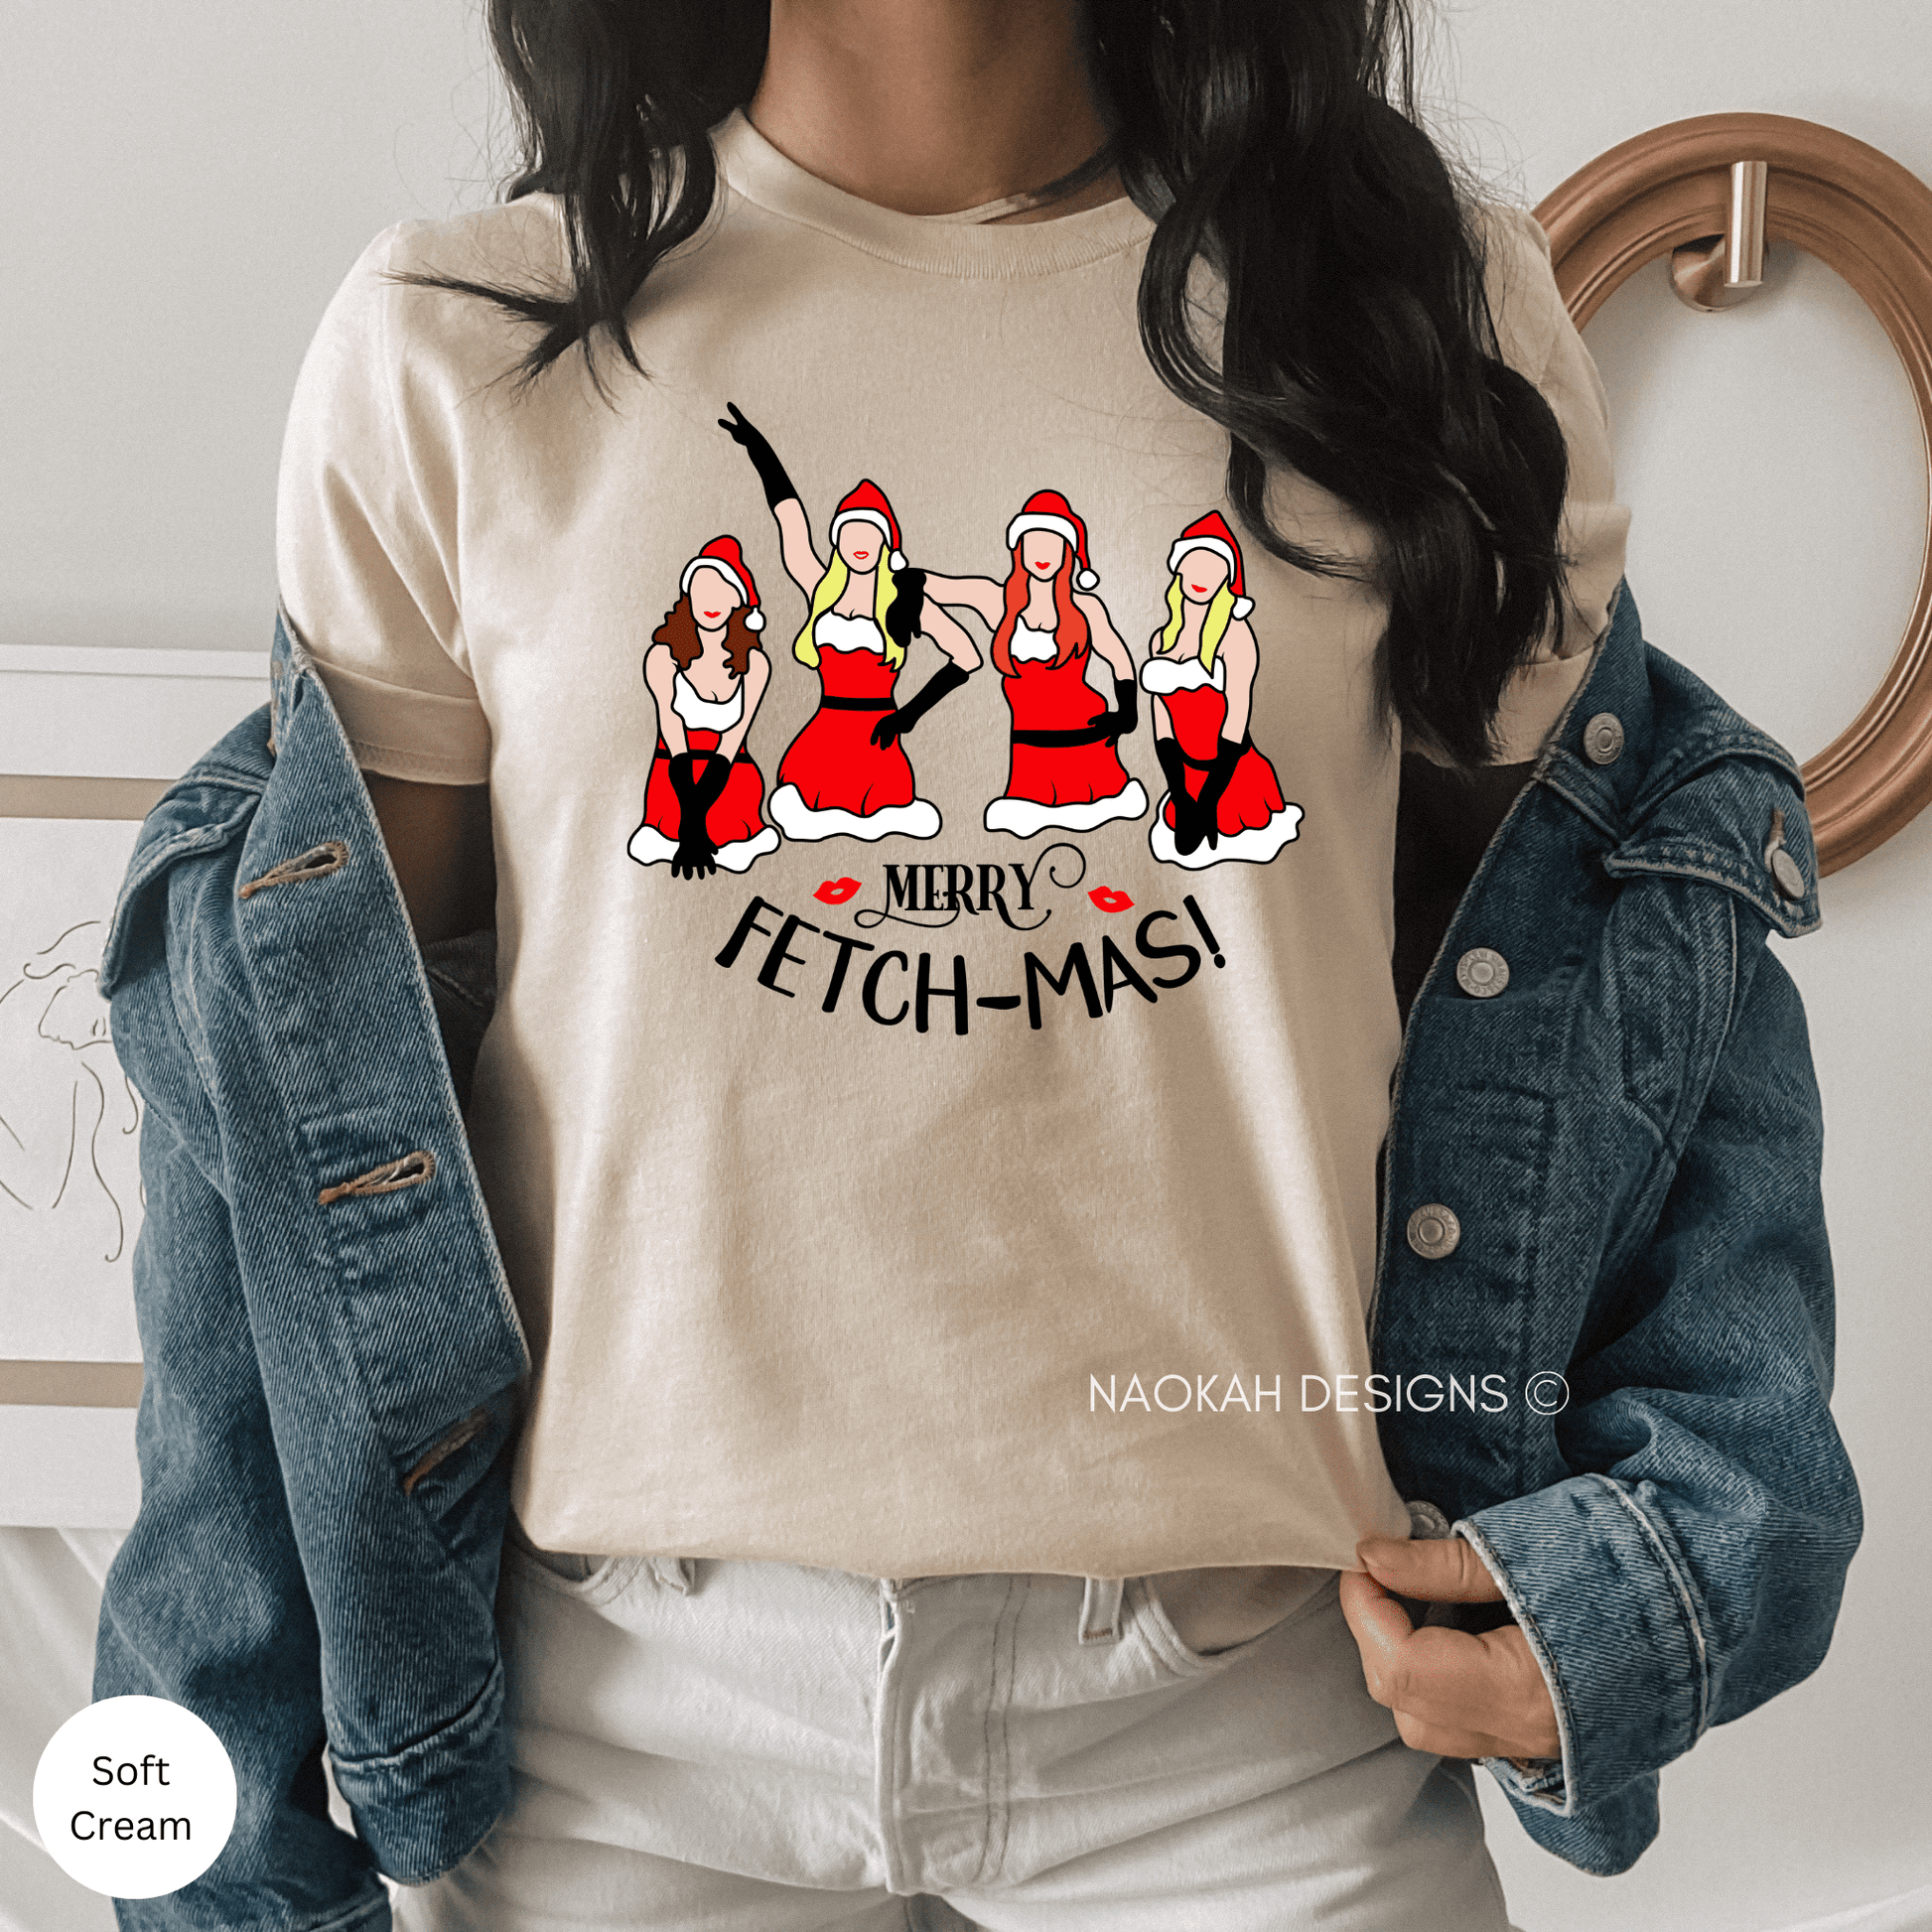 Merry Fetchmas Shirt, Mean Girls Inspired Shirt, Merry Christmas, Christmas Shirt, Woman Christmas Shirt, Christmas Gift Christmas Party